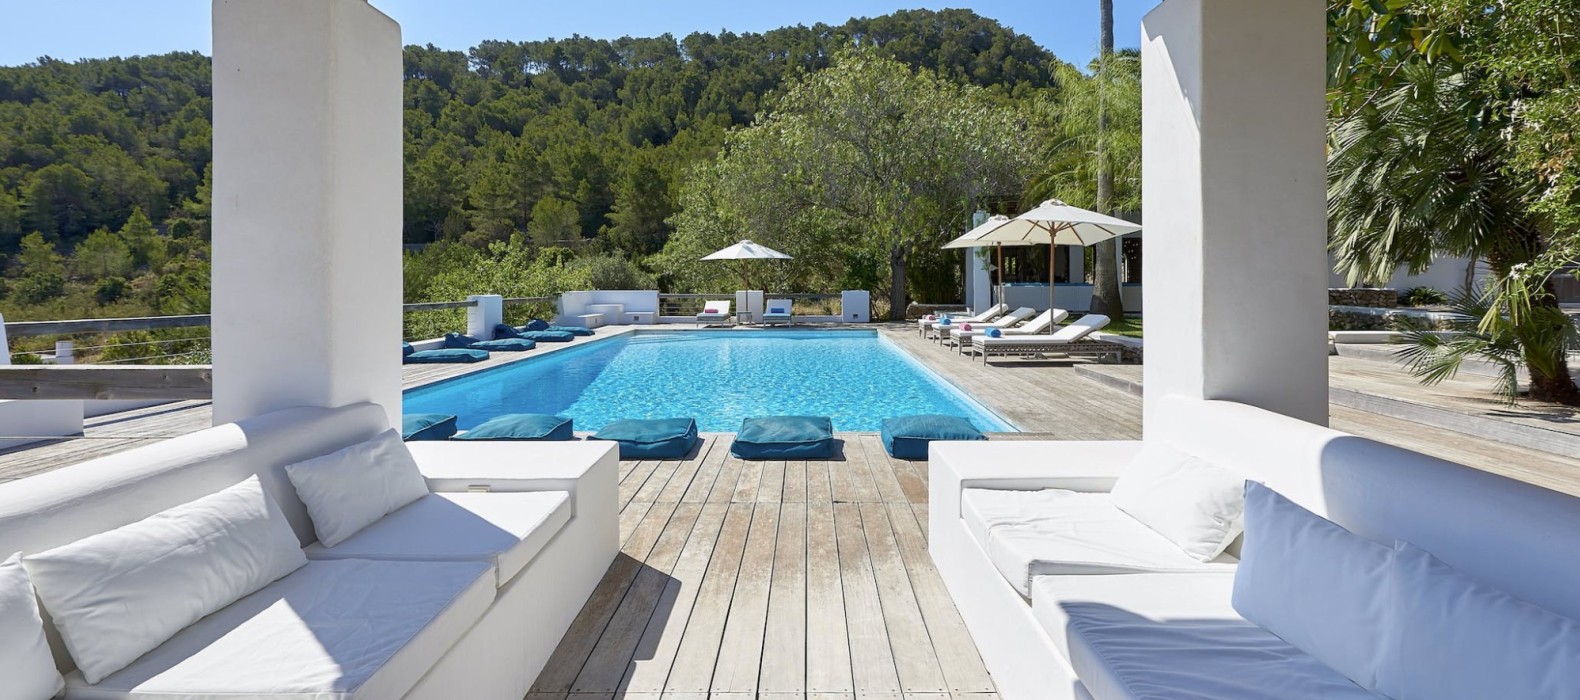 Exterior pool and chill area of Finca Las Velas in Ibiza